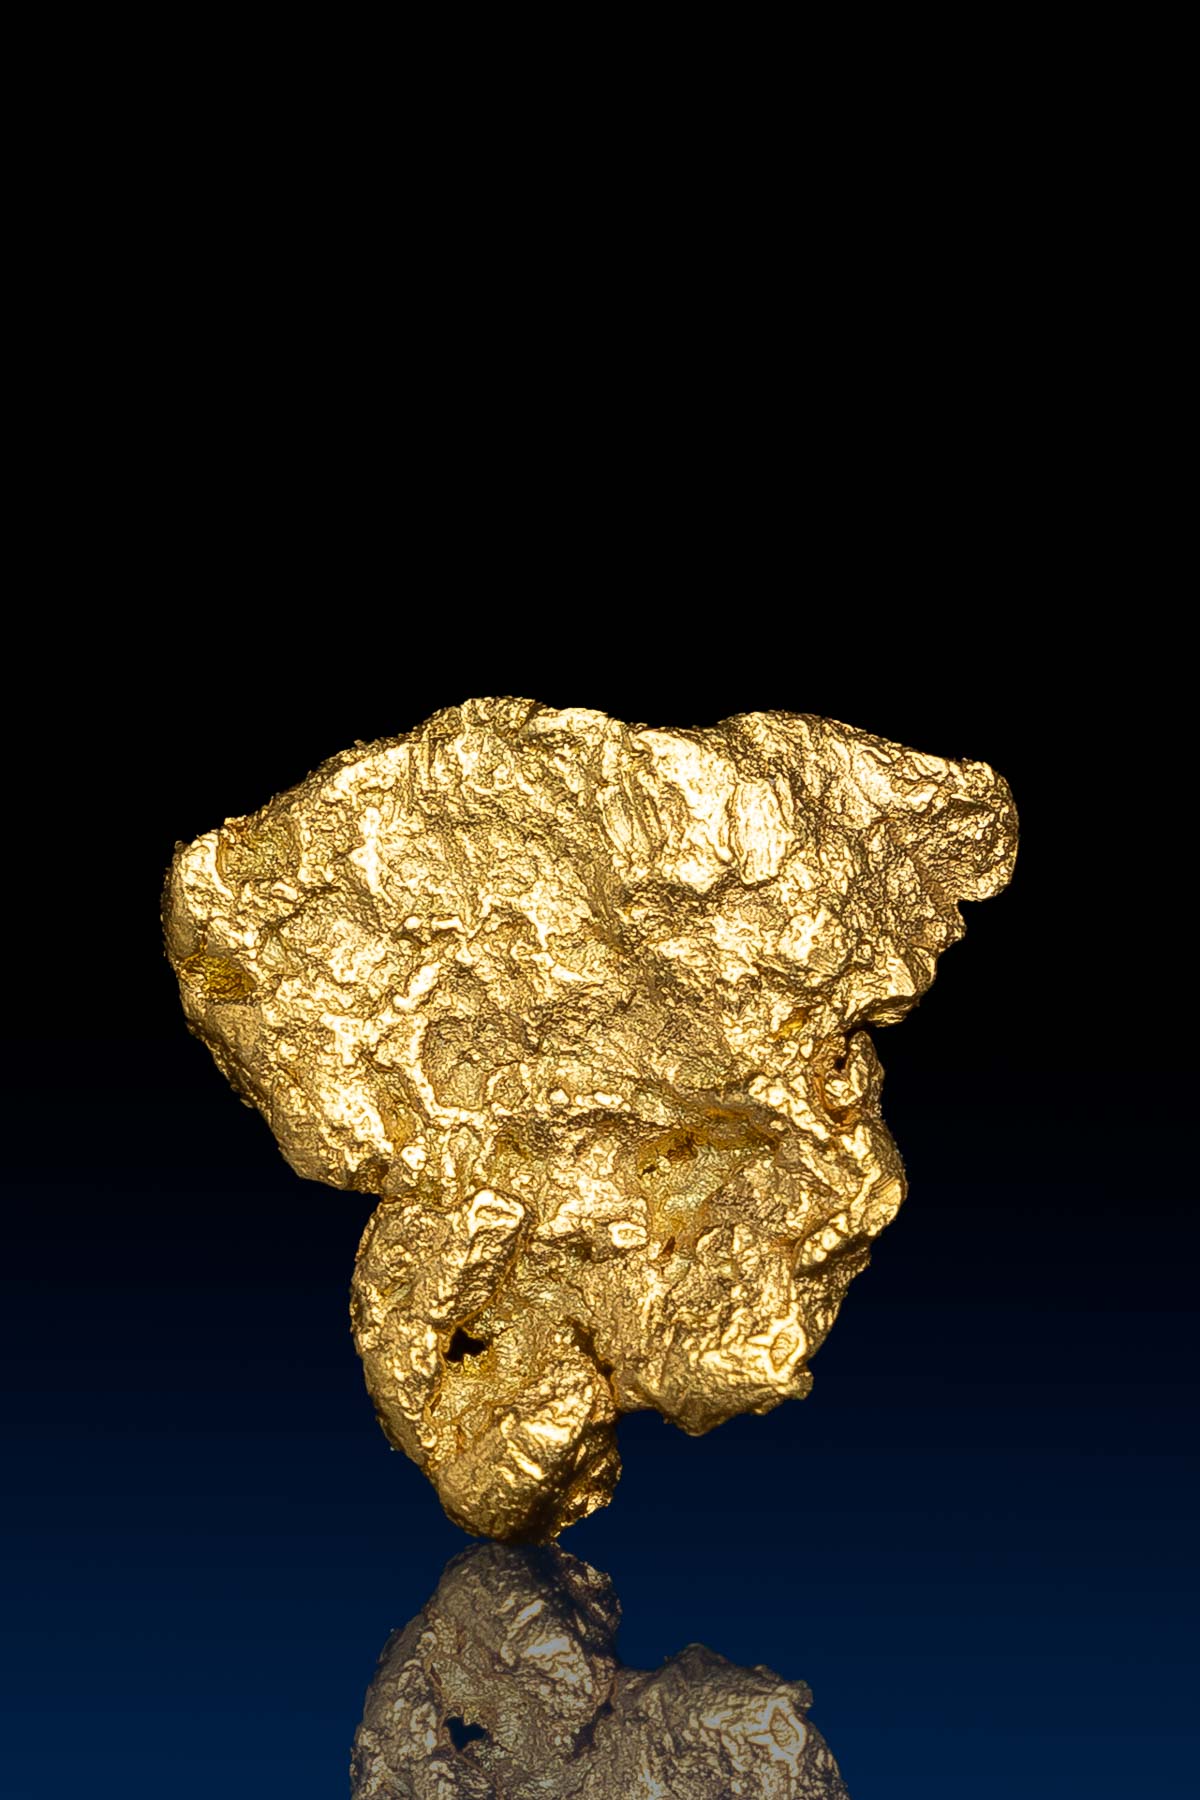 Triangular Natural Gold Nugget - 2022 Alaska Mining Season